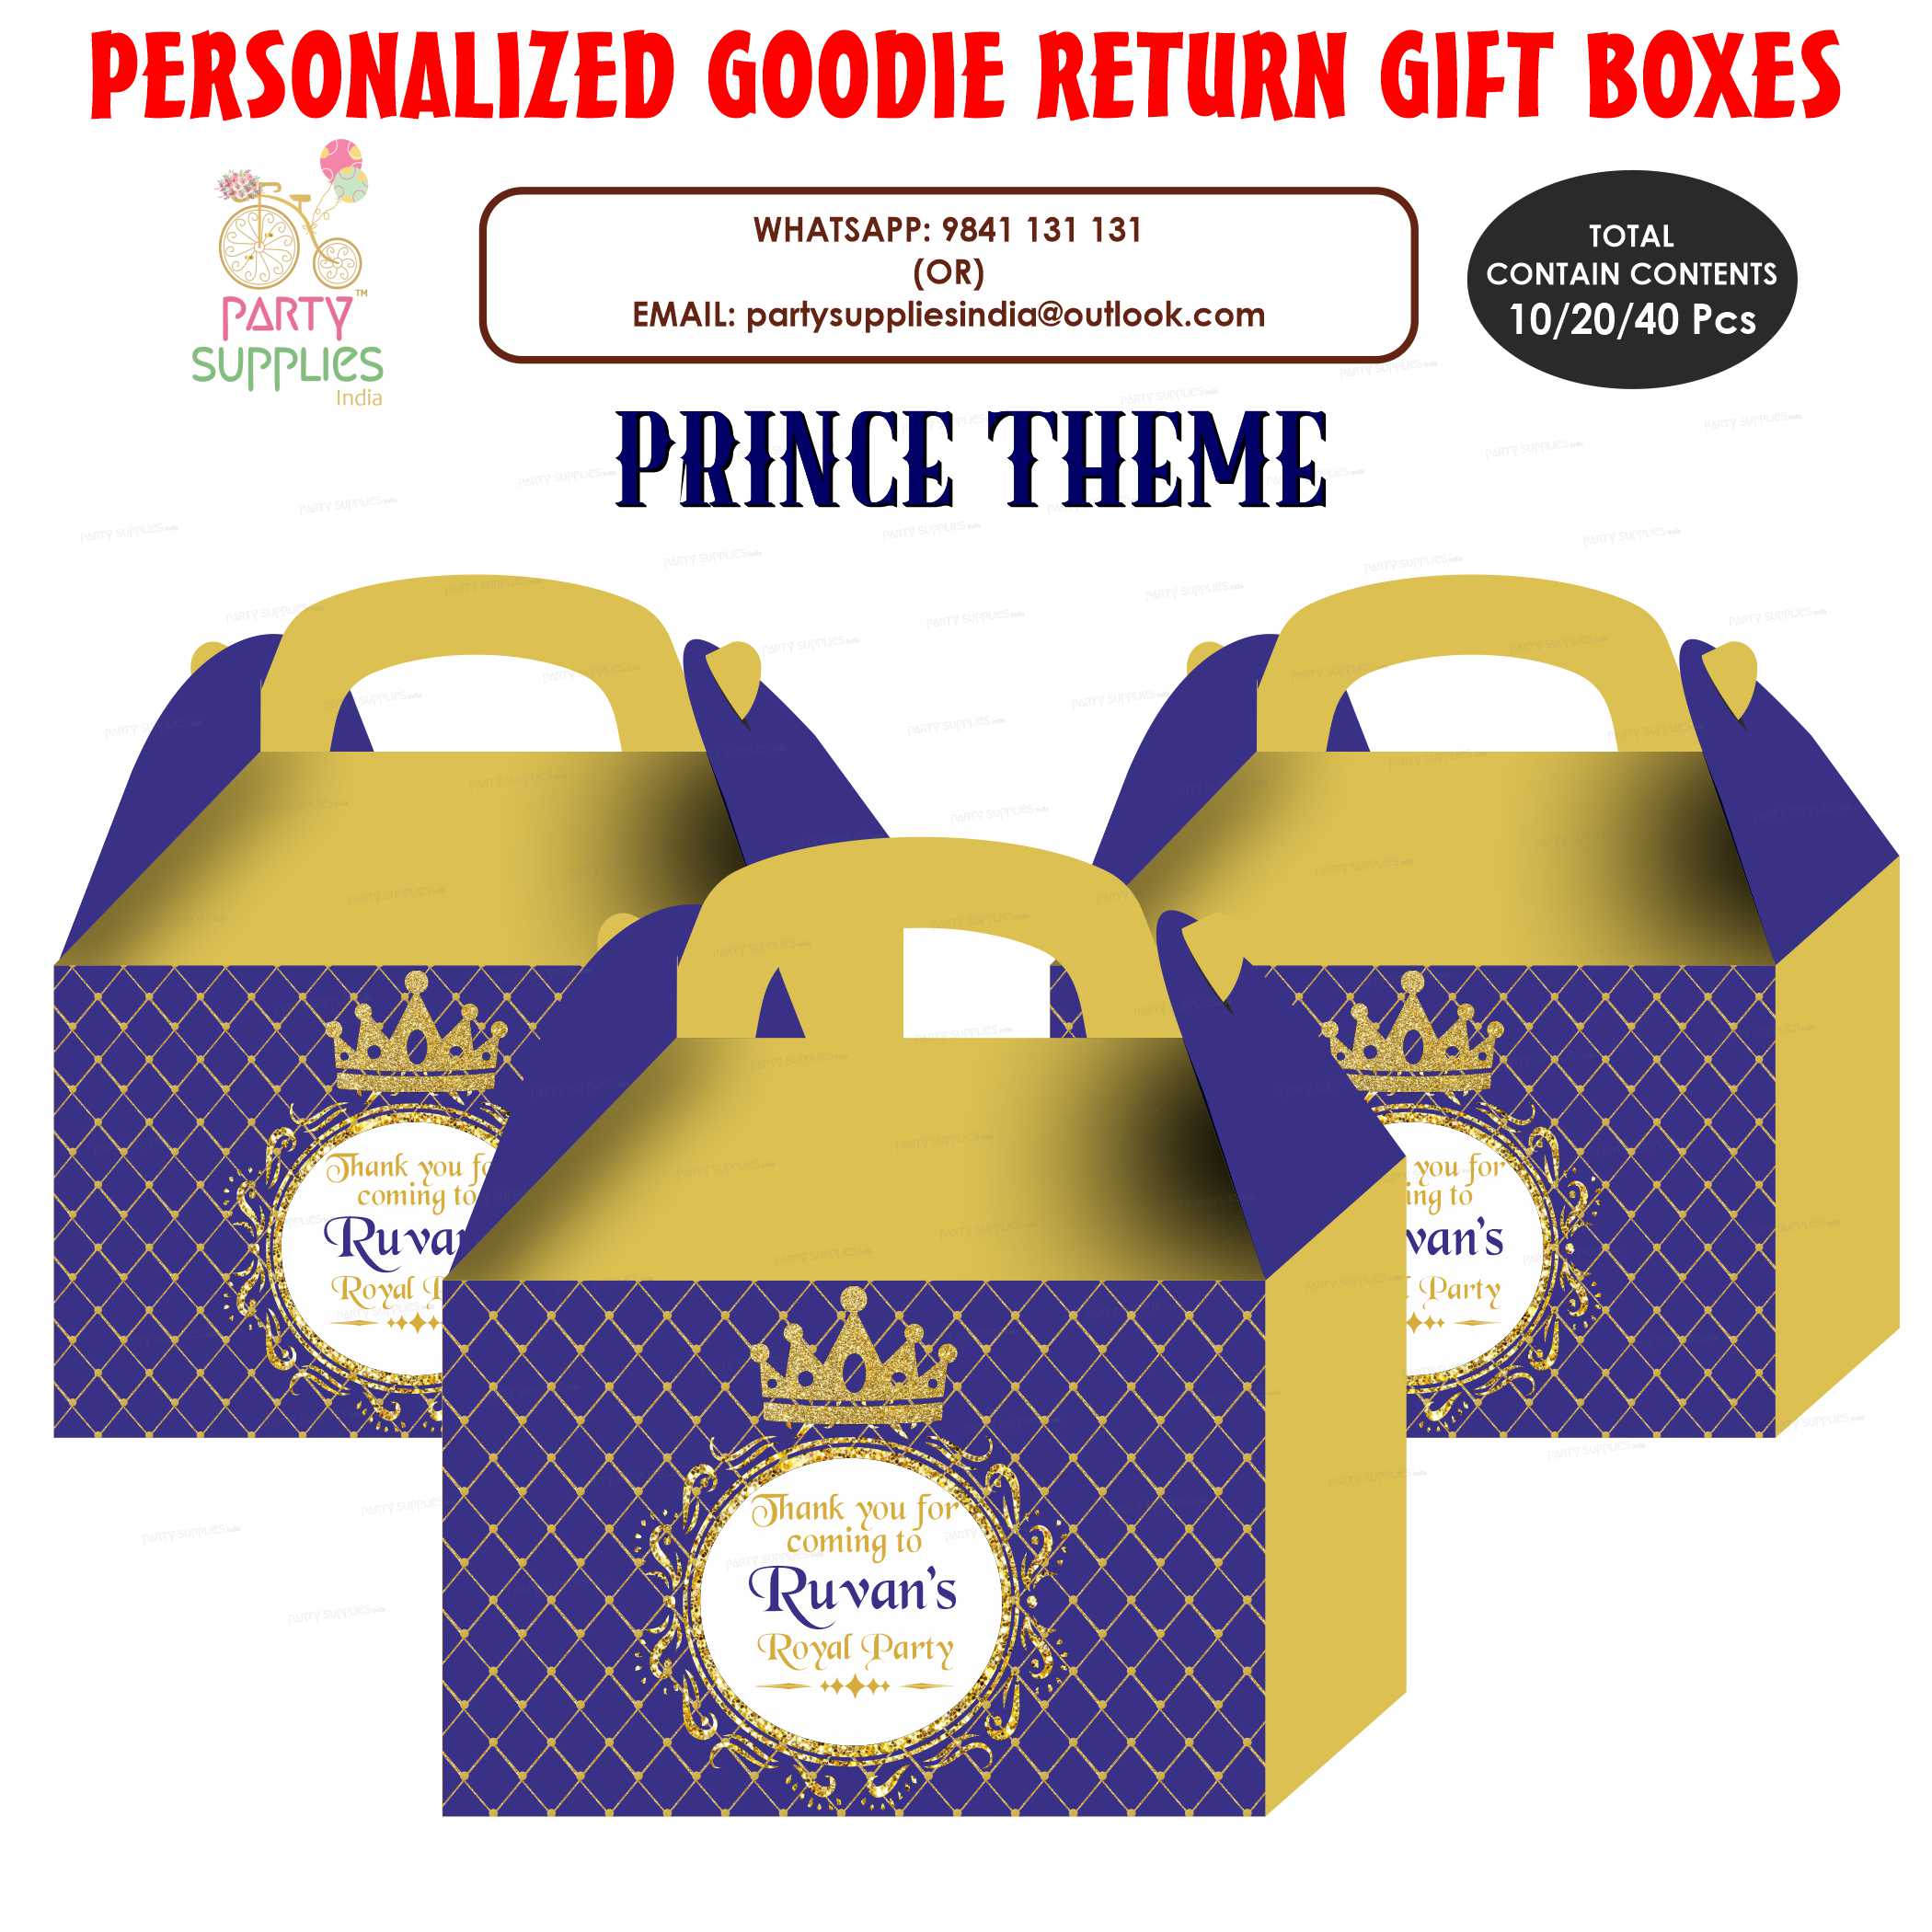 PSI Prince Theme Goodie Return Gift Boxes